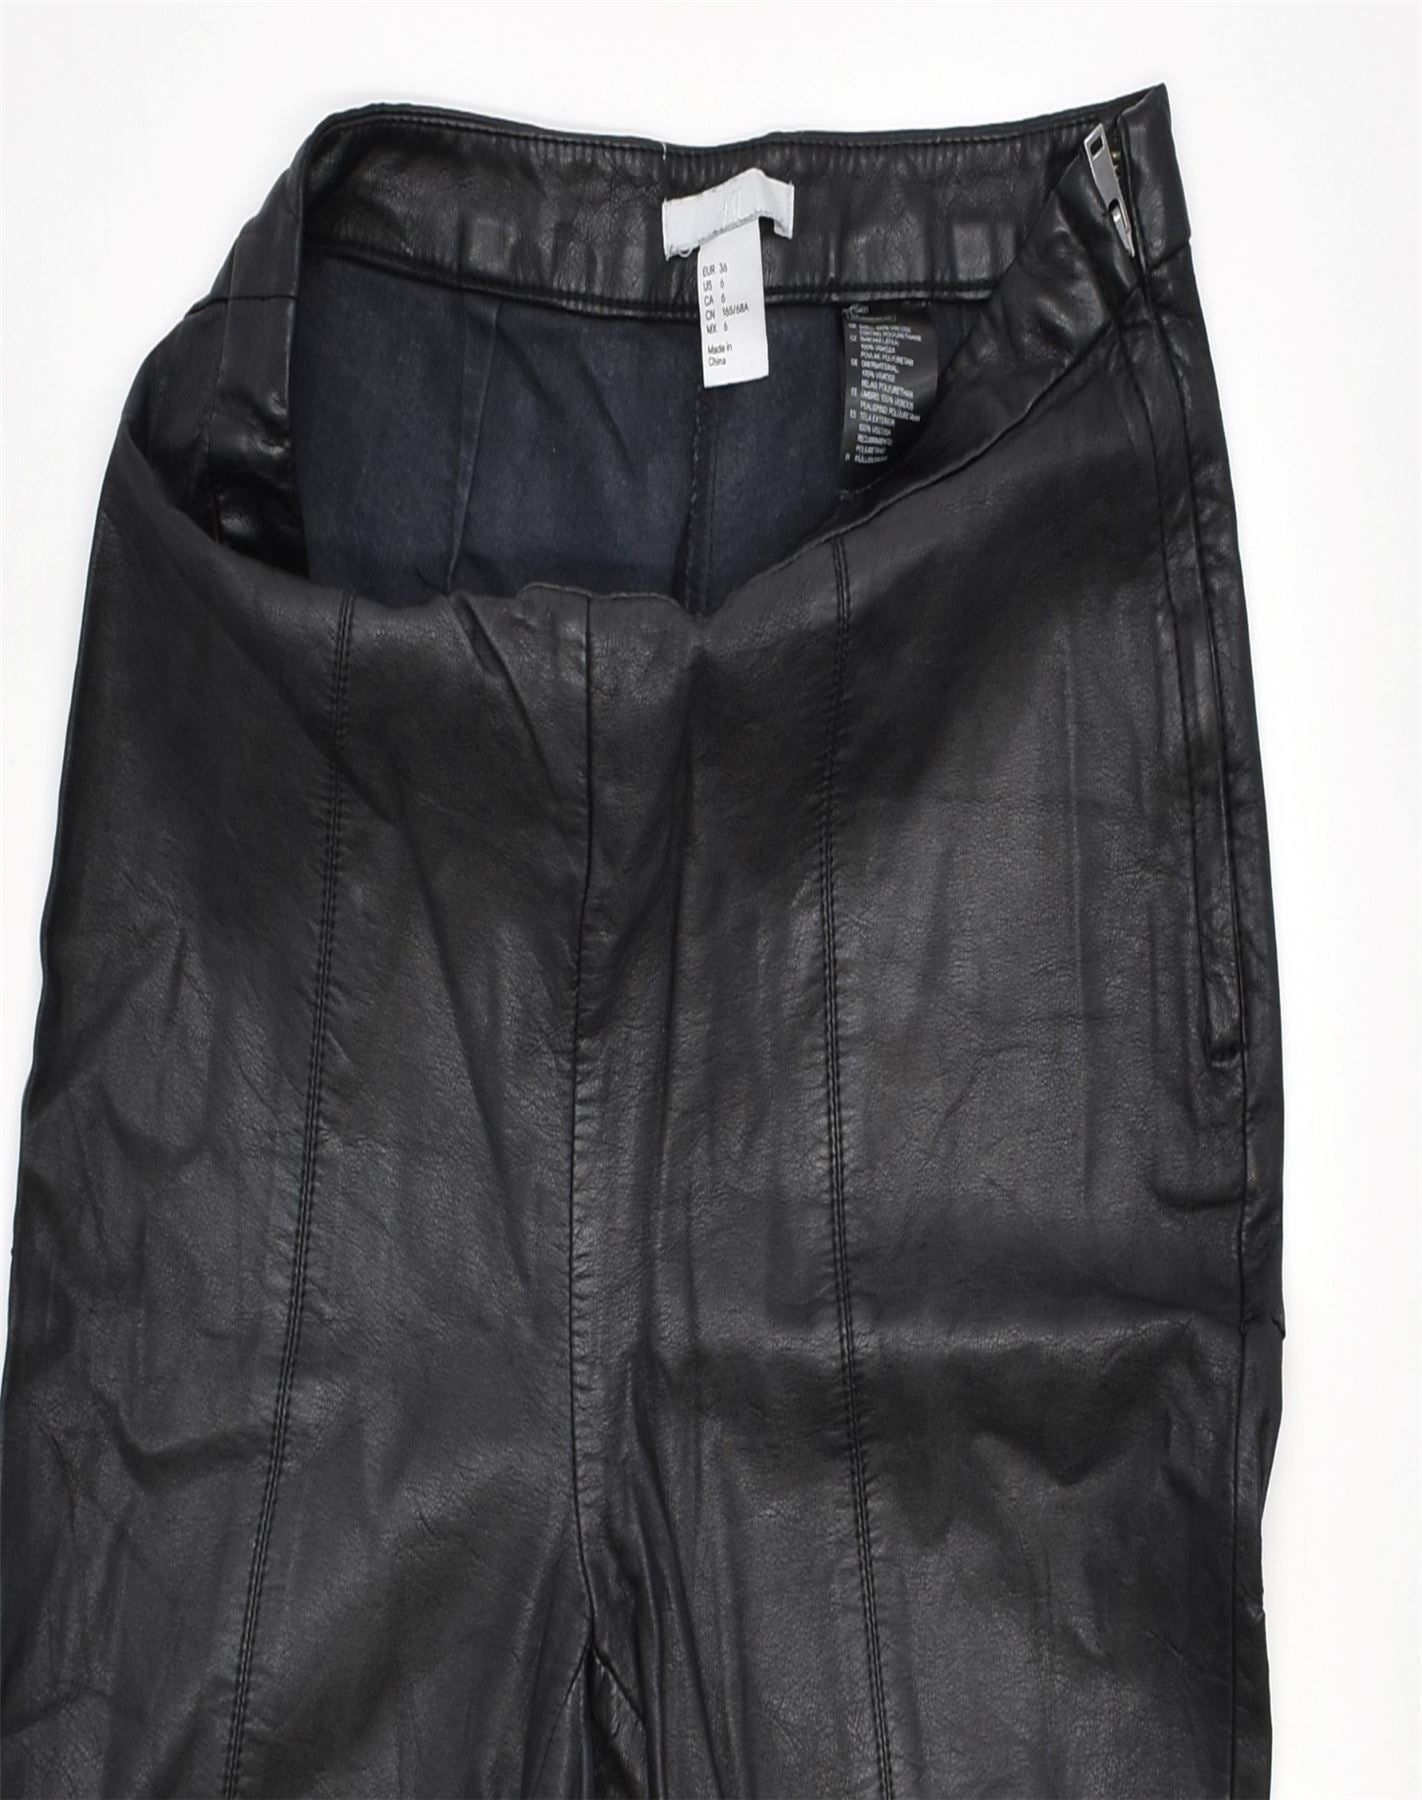 H&M Womens Faux Leather Leggings US 6 Medium W28 L26 Black Viscose